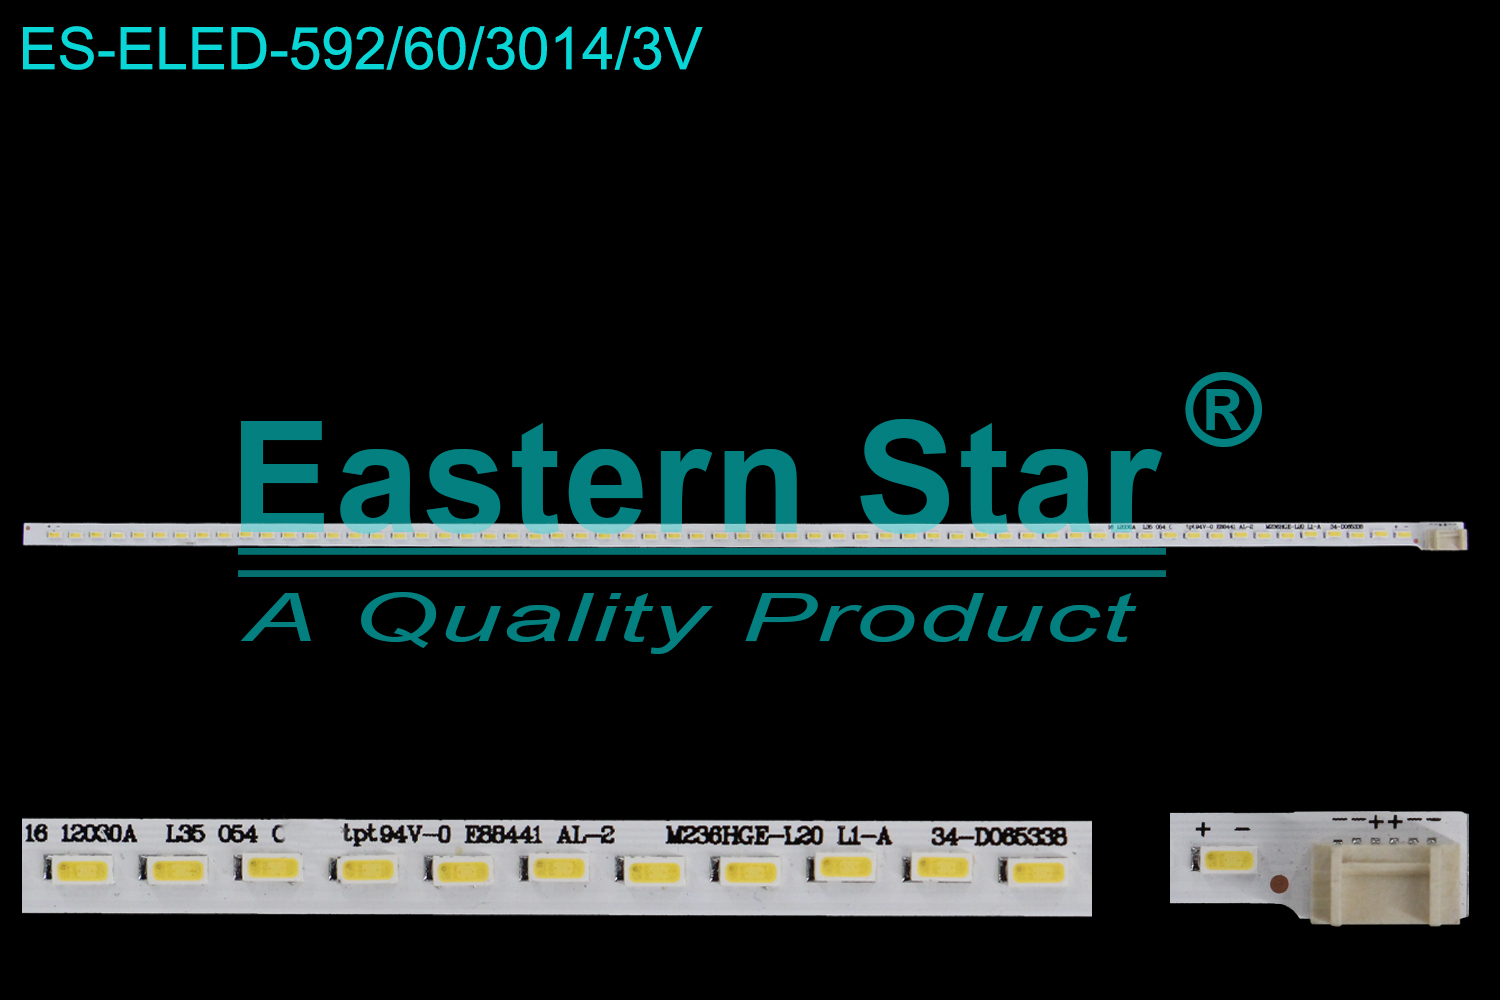 ES-ELED-592 ELED/EDGE TV backlight use for 23.6'' SAMSUNG M236HGE-L20 L1-A 34-D065338  LED STRIPS(/)